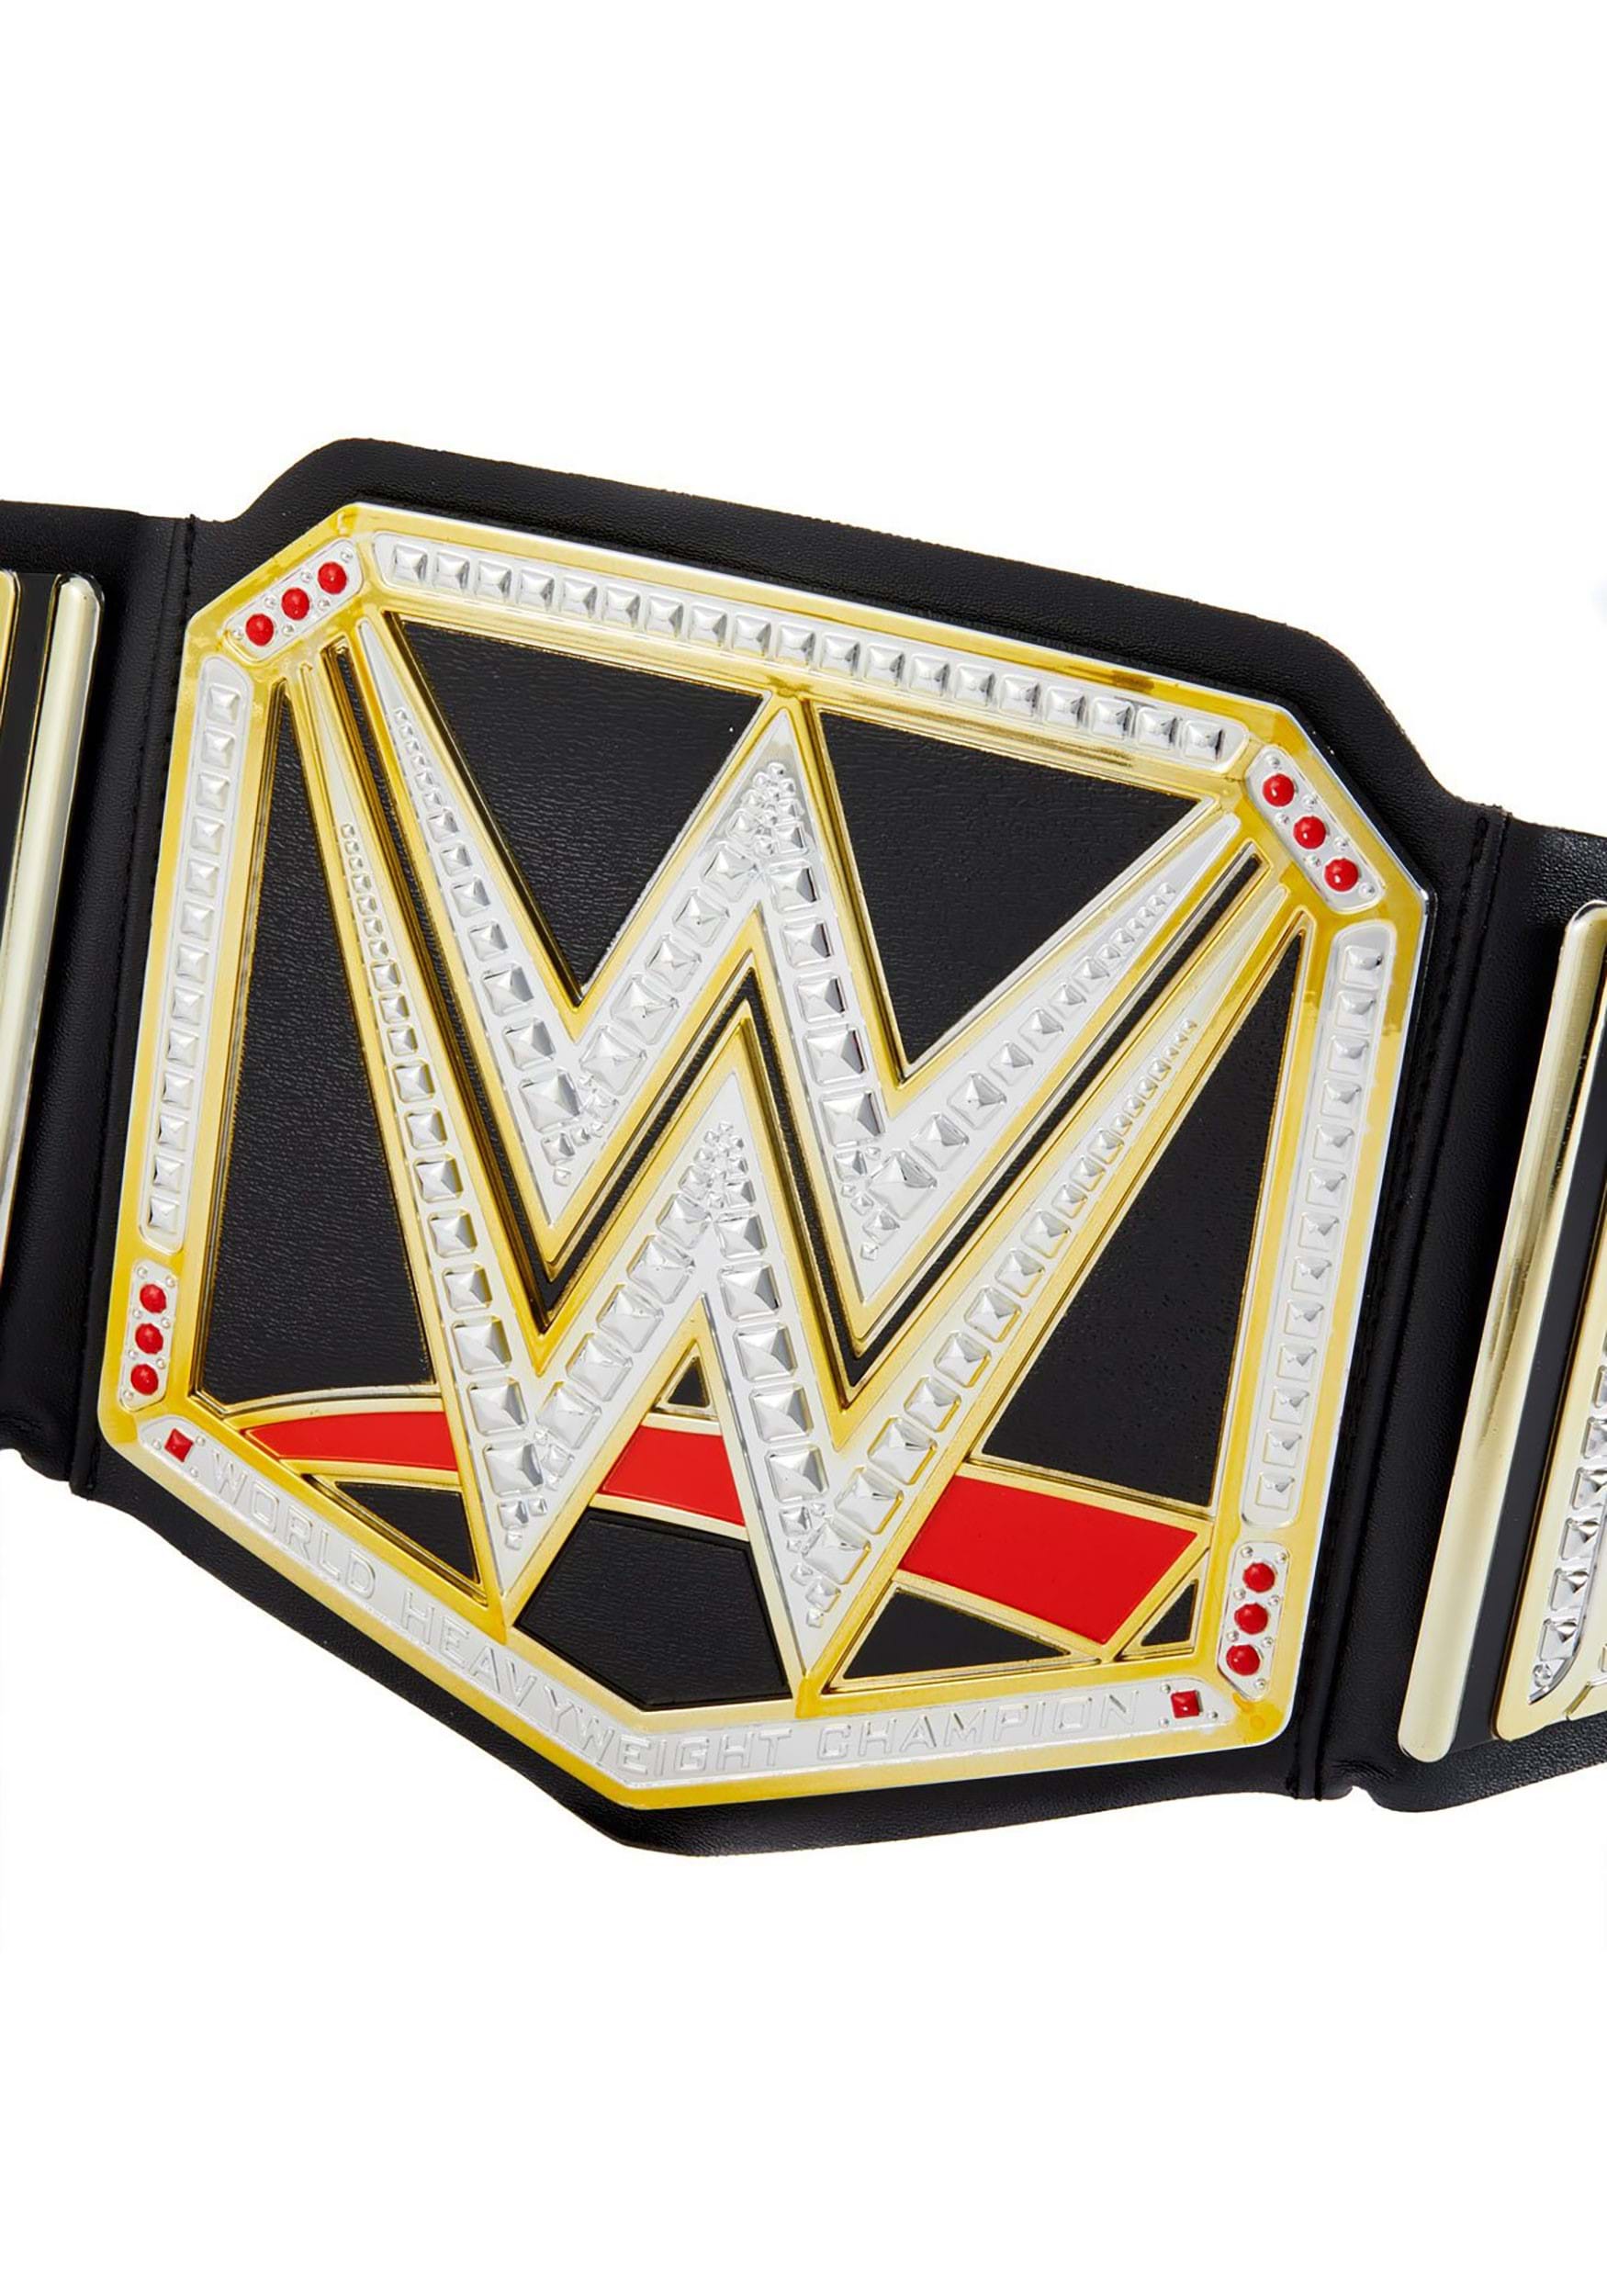 Roleplay WWE Championship Belt Accessory , WWE Belts